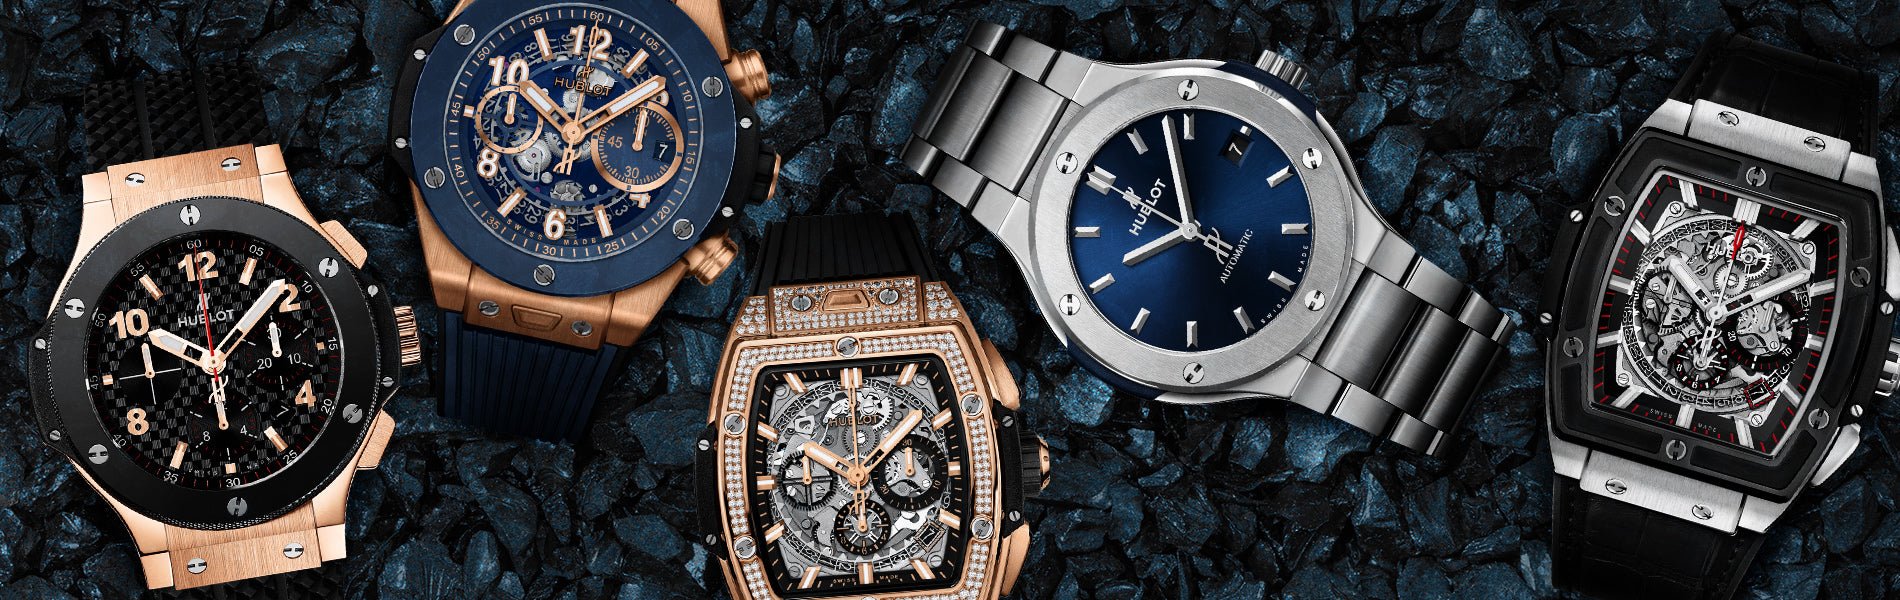 Hublot Big Bang Diamond Watch : buy online in NYC. Best price at TRAXNYC.